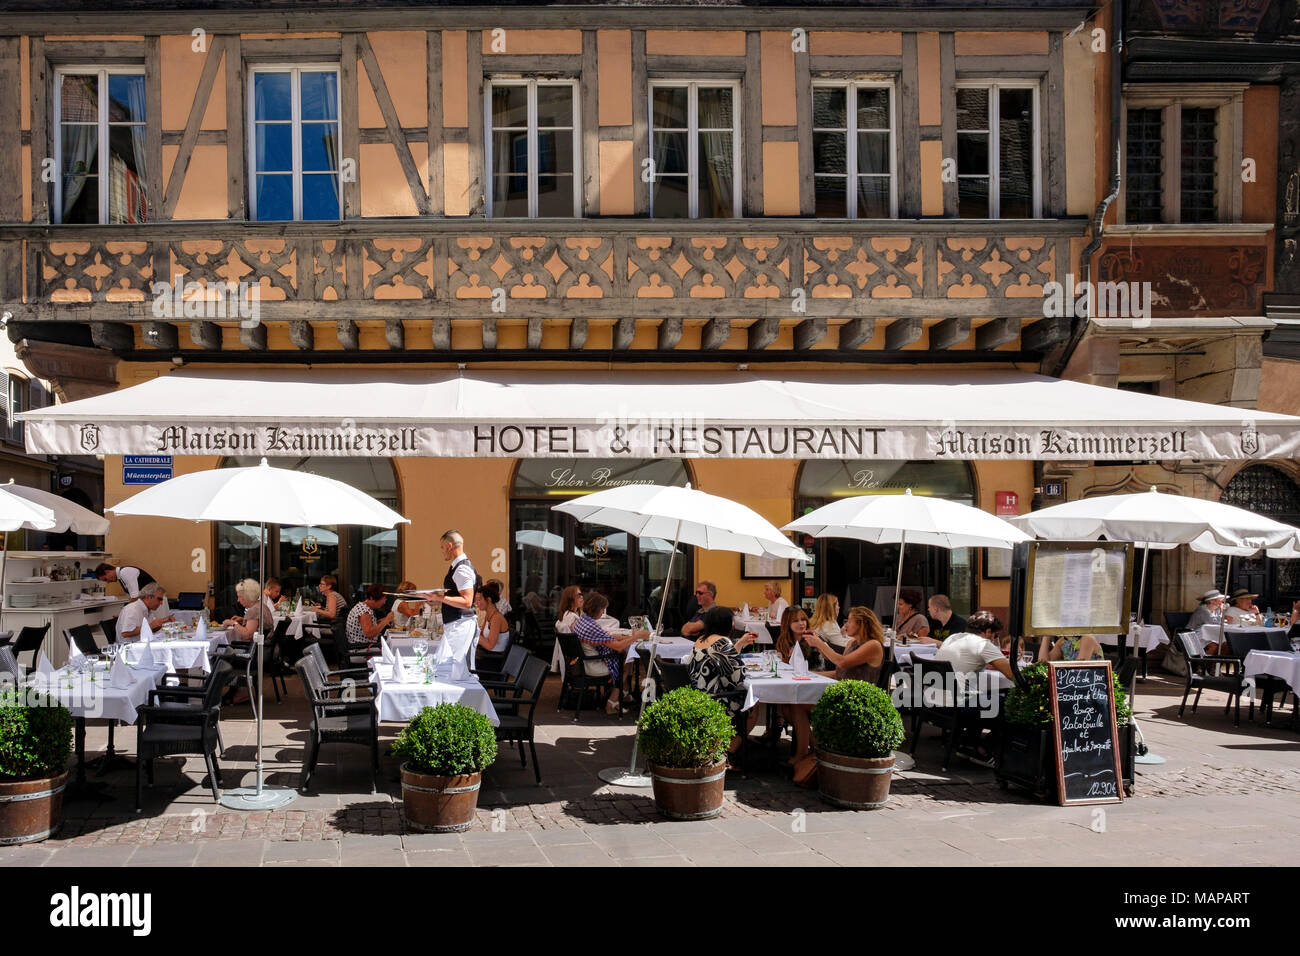 Alfresco restaurant terrace, customers lunching, Maison Kammerzell medieval house, 16th Century, Strasbourg, Alsace, France, Europe, Stock Photo